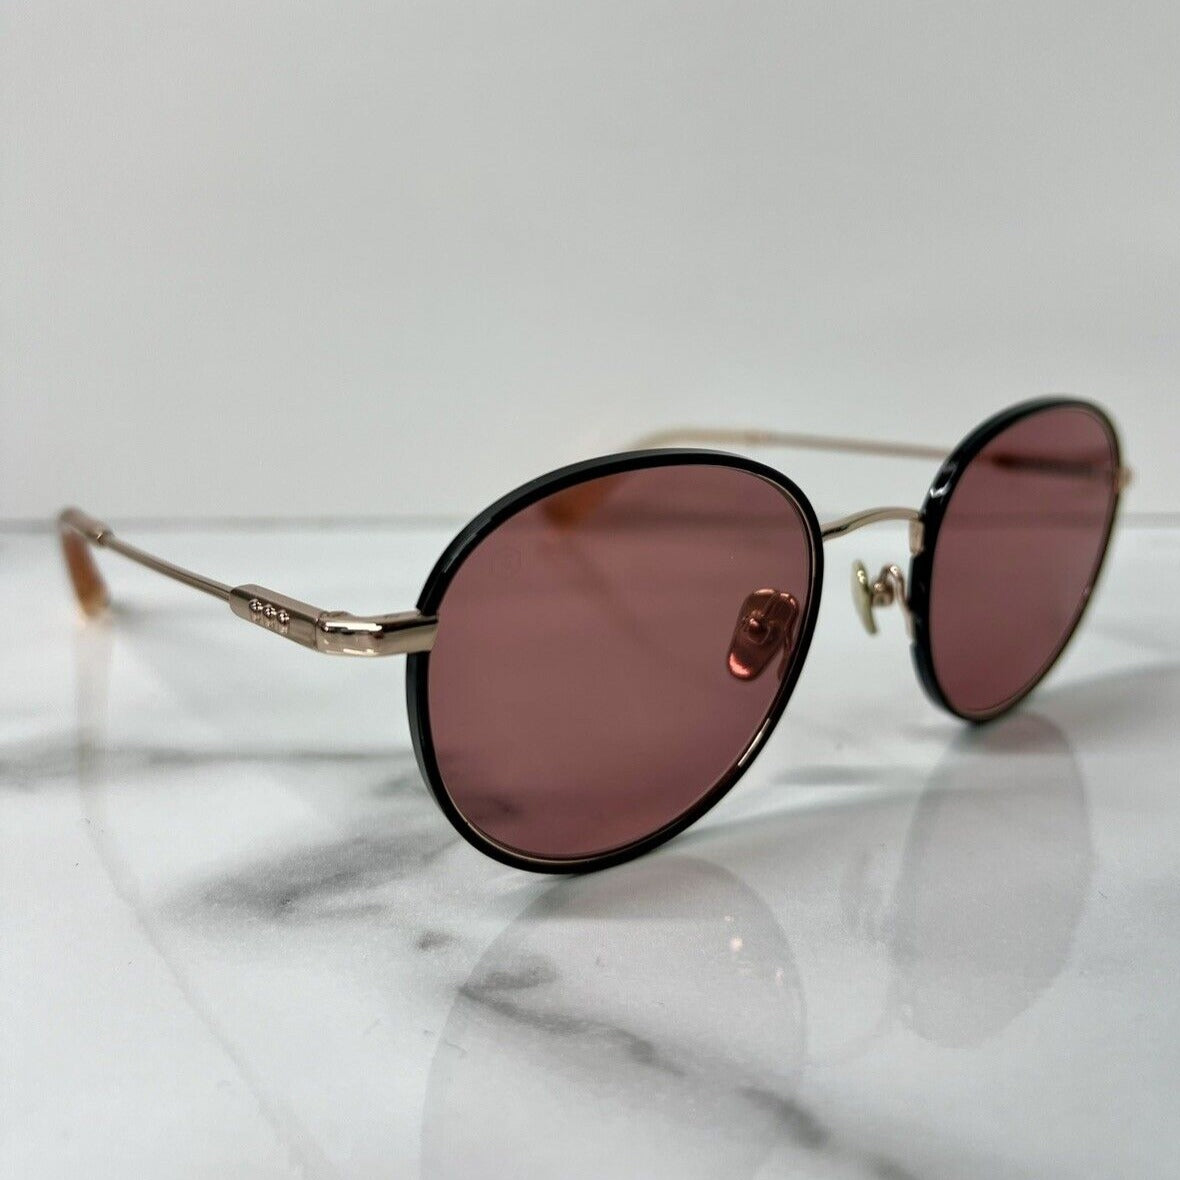 Taylor Morris Sunglasses Bonchurch 32083 C8 pink gold metal round glasses